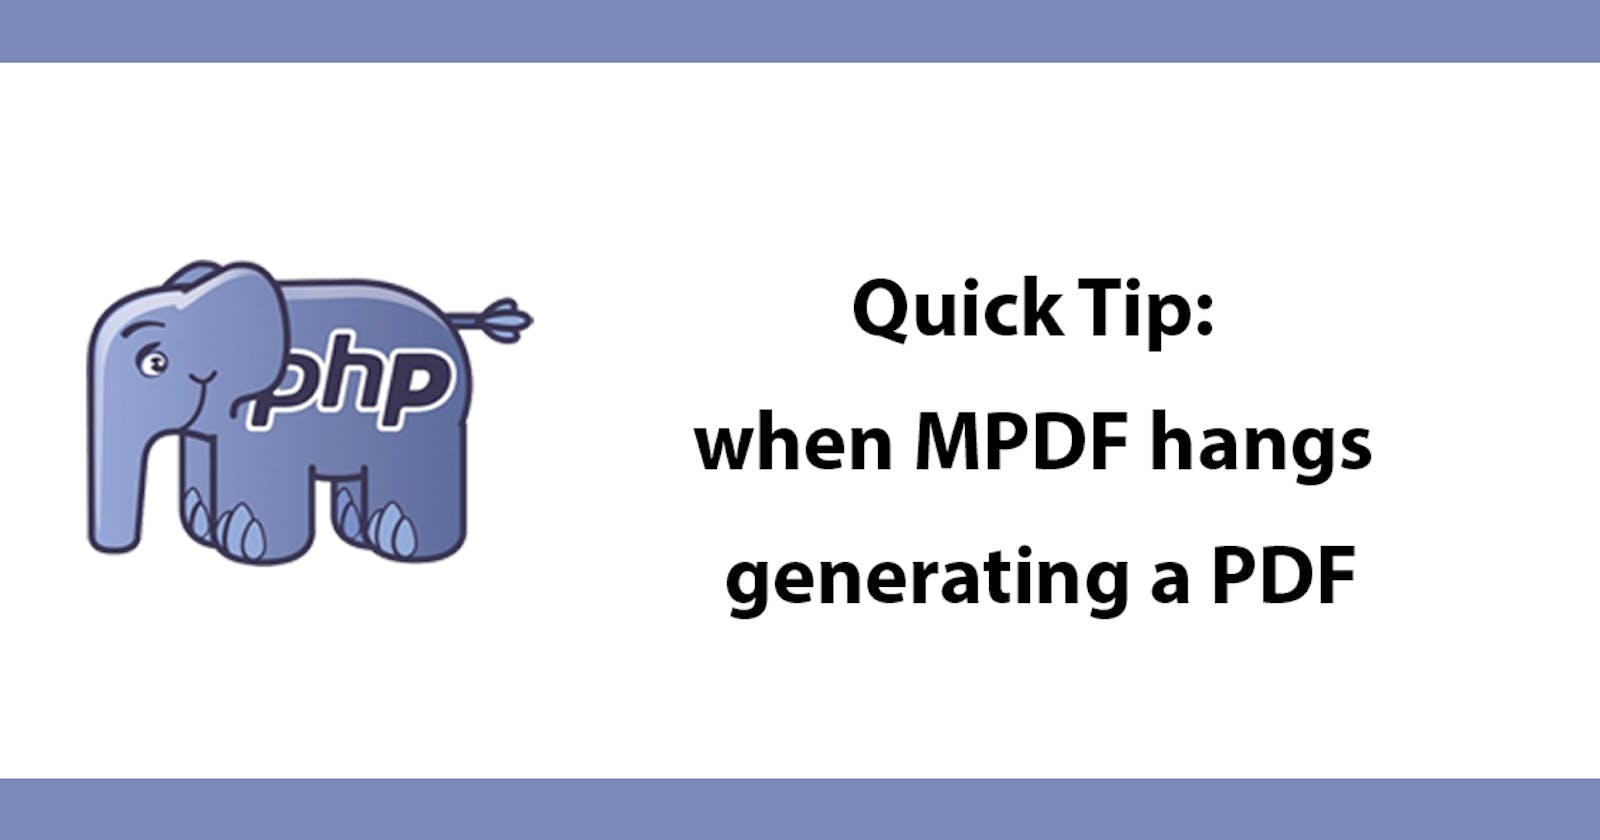 Quick Tip: when MPDF hangs generating a PDF